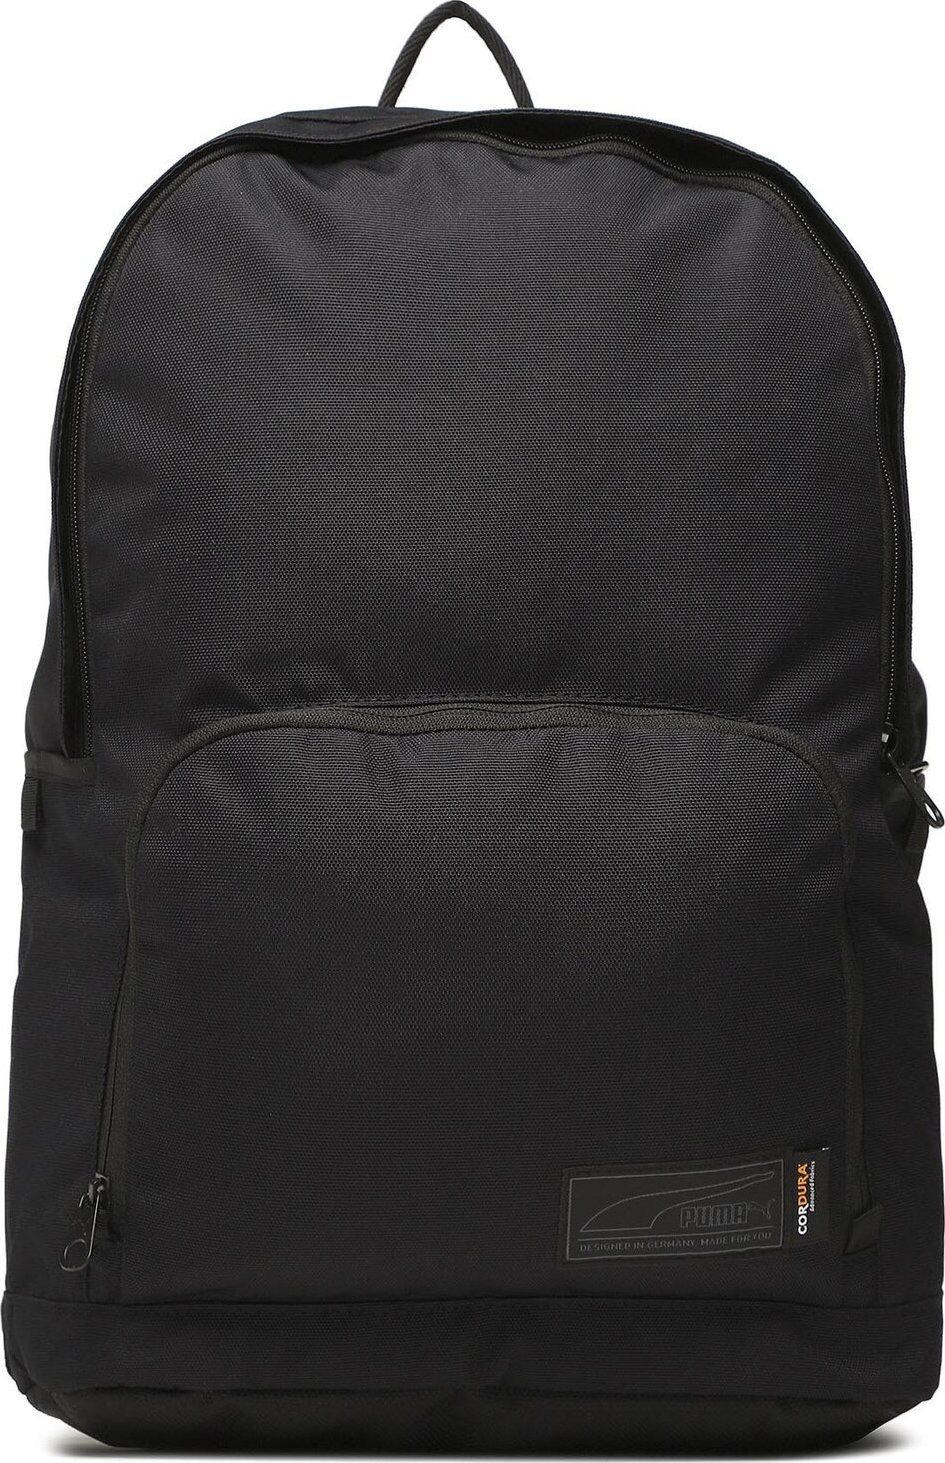 Batoh Puma Axis Backpack 079668 Black 01